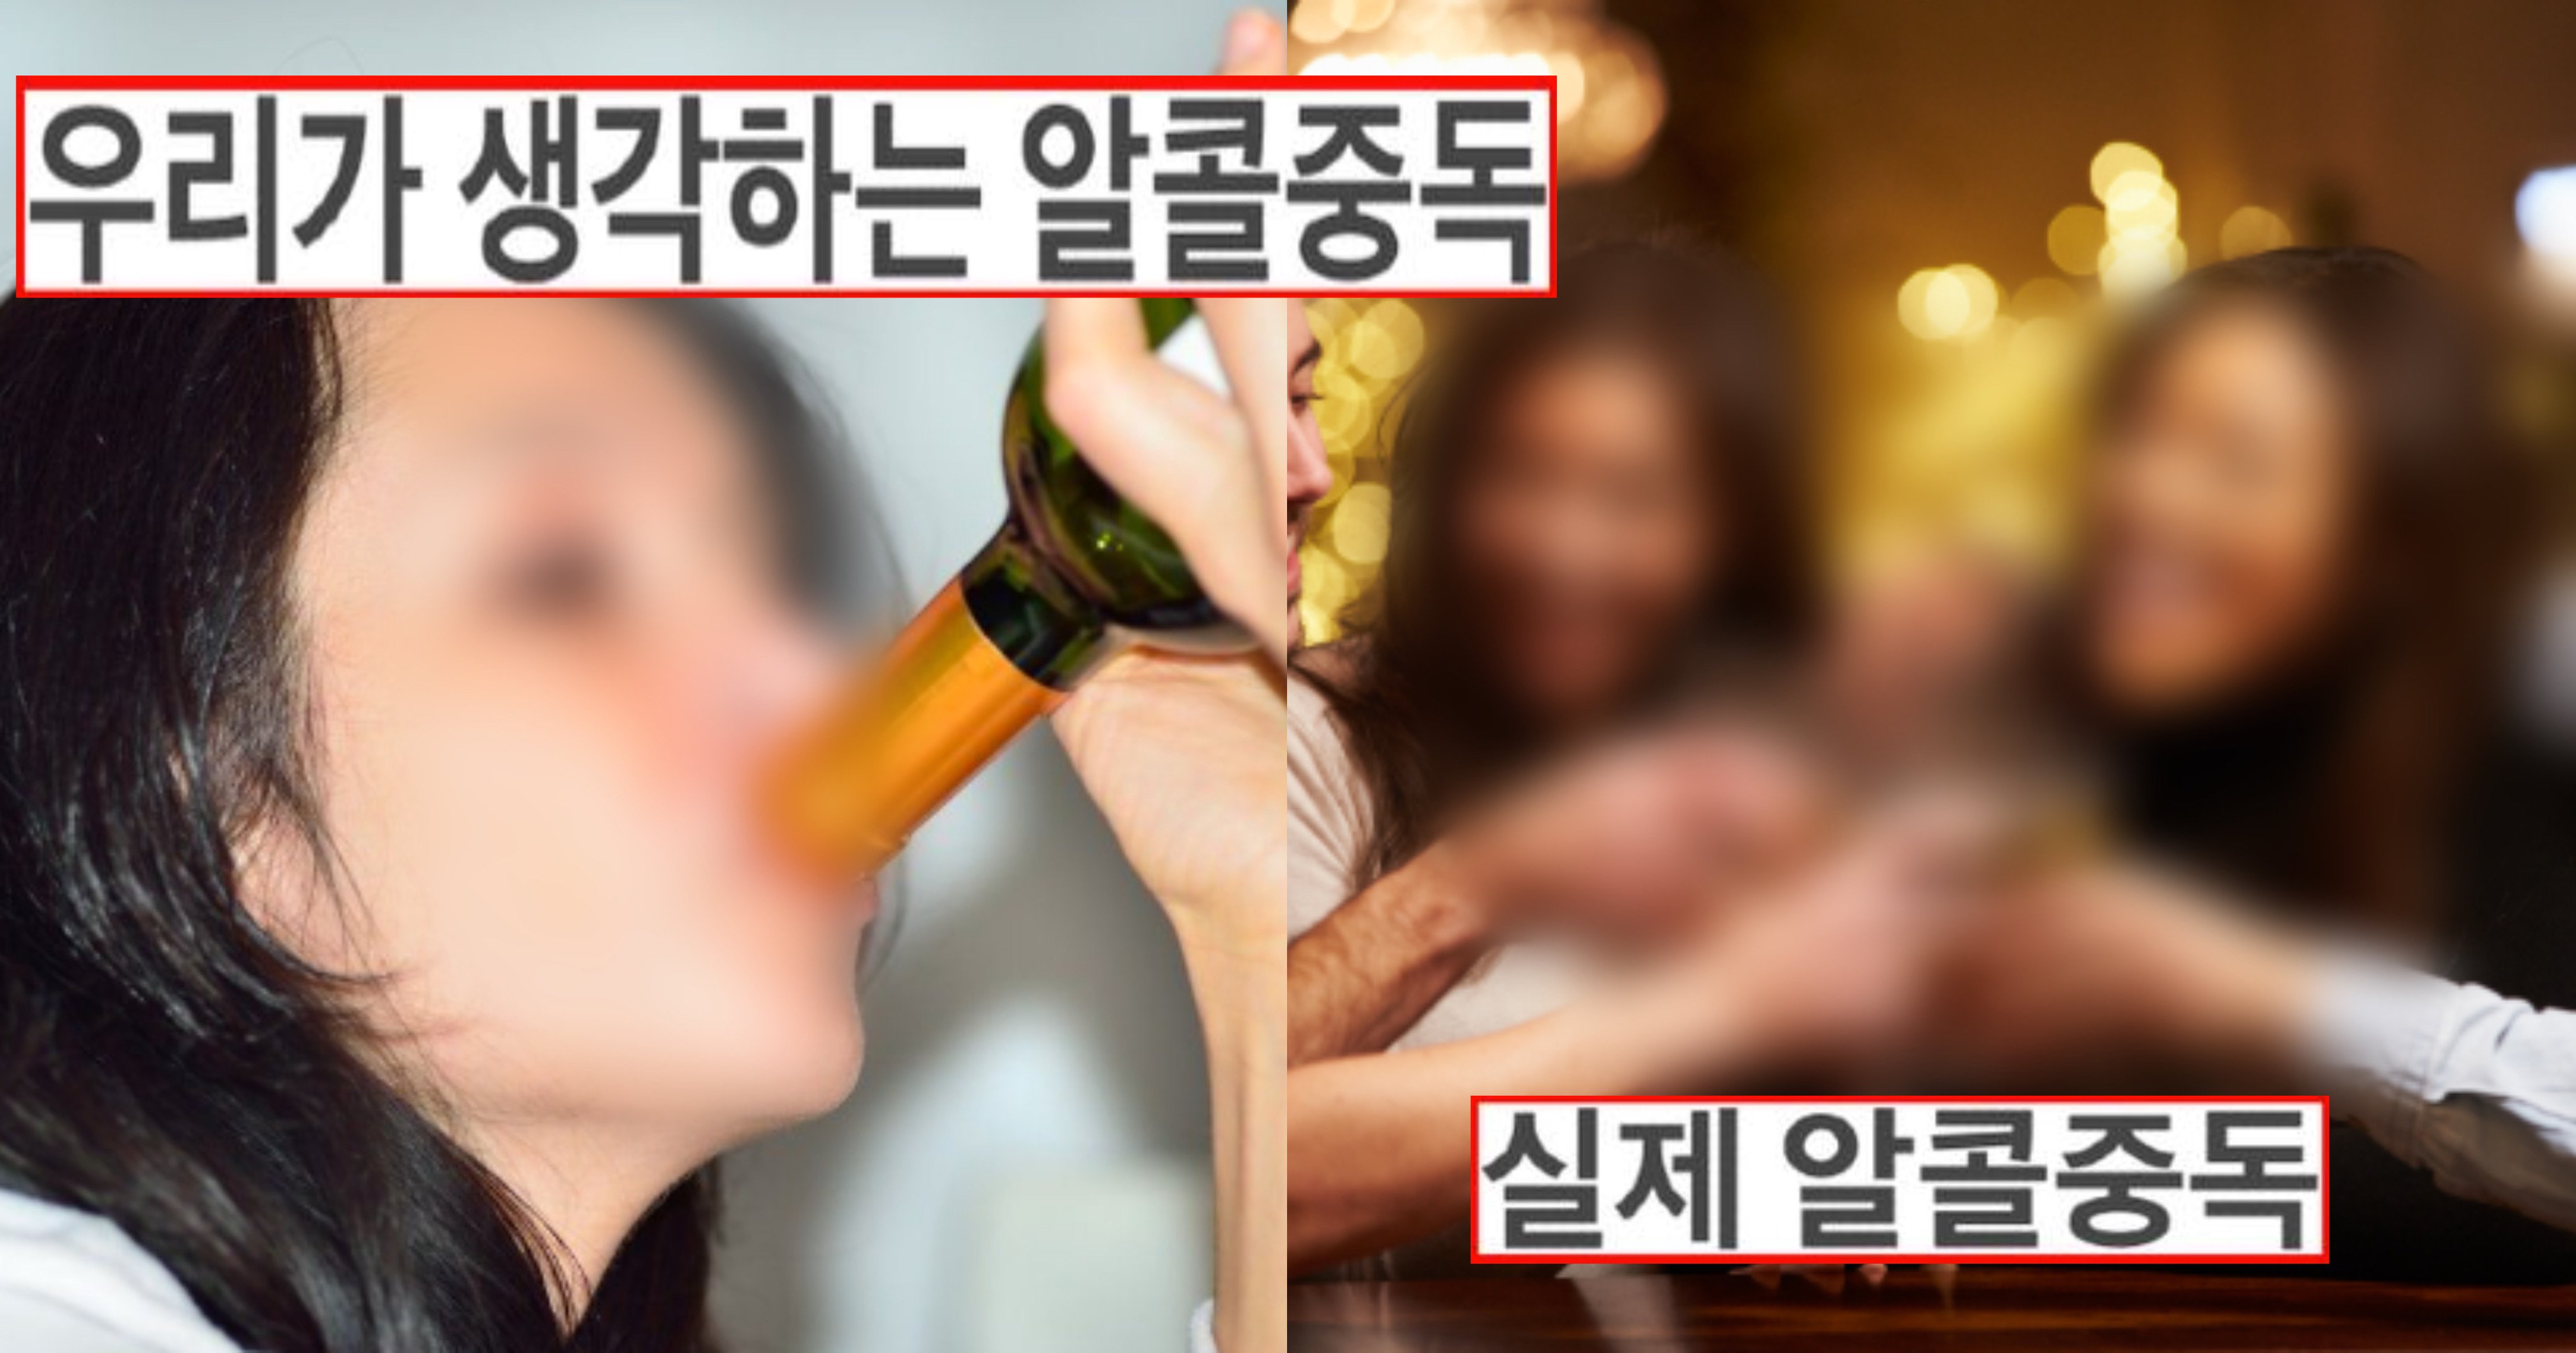 7e70298c 5908 4535 afa9 4bd56bb0f350.jpeg?resize=412,232 - 실제와는 다른 한국인이 생각하는 '알콜중독자'의 모습